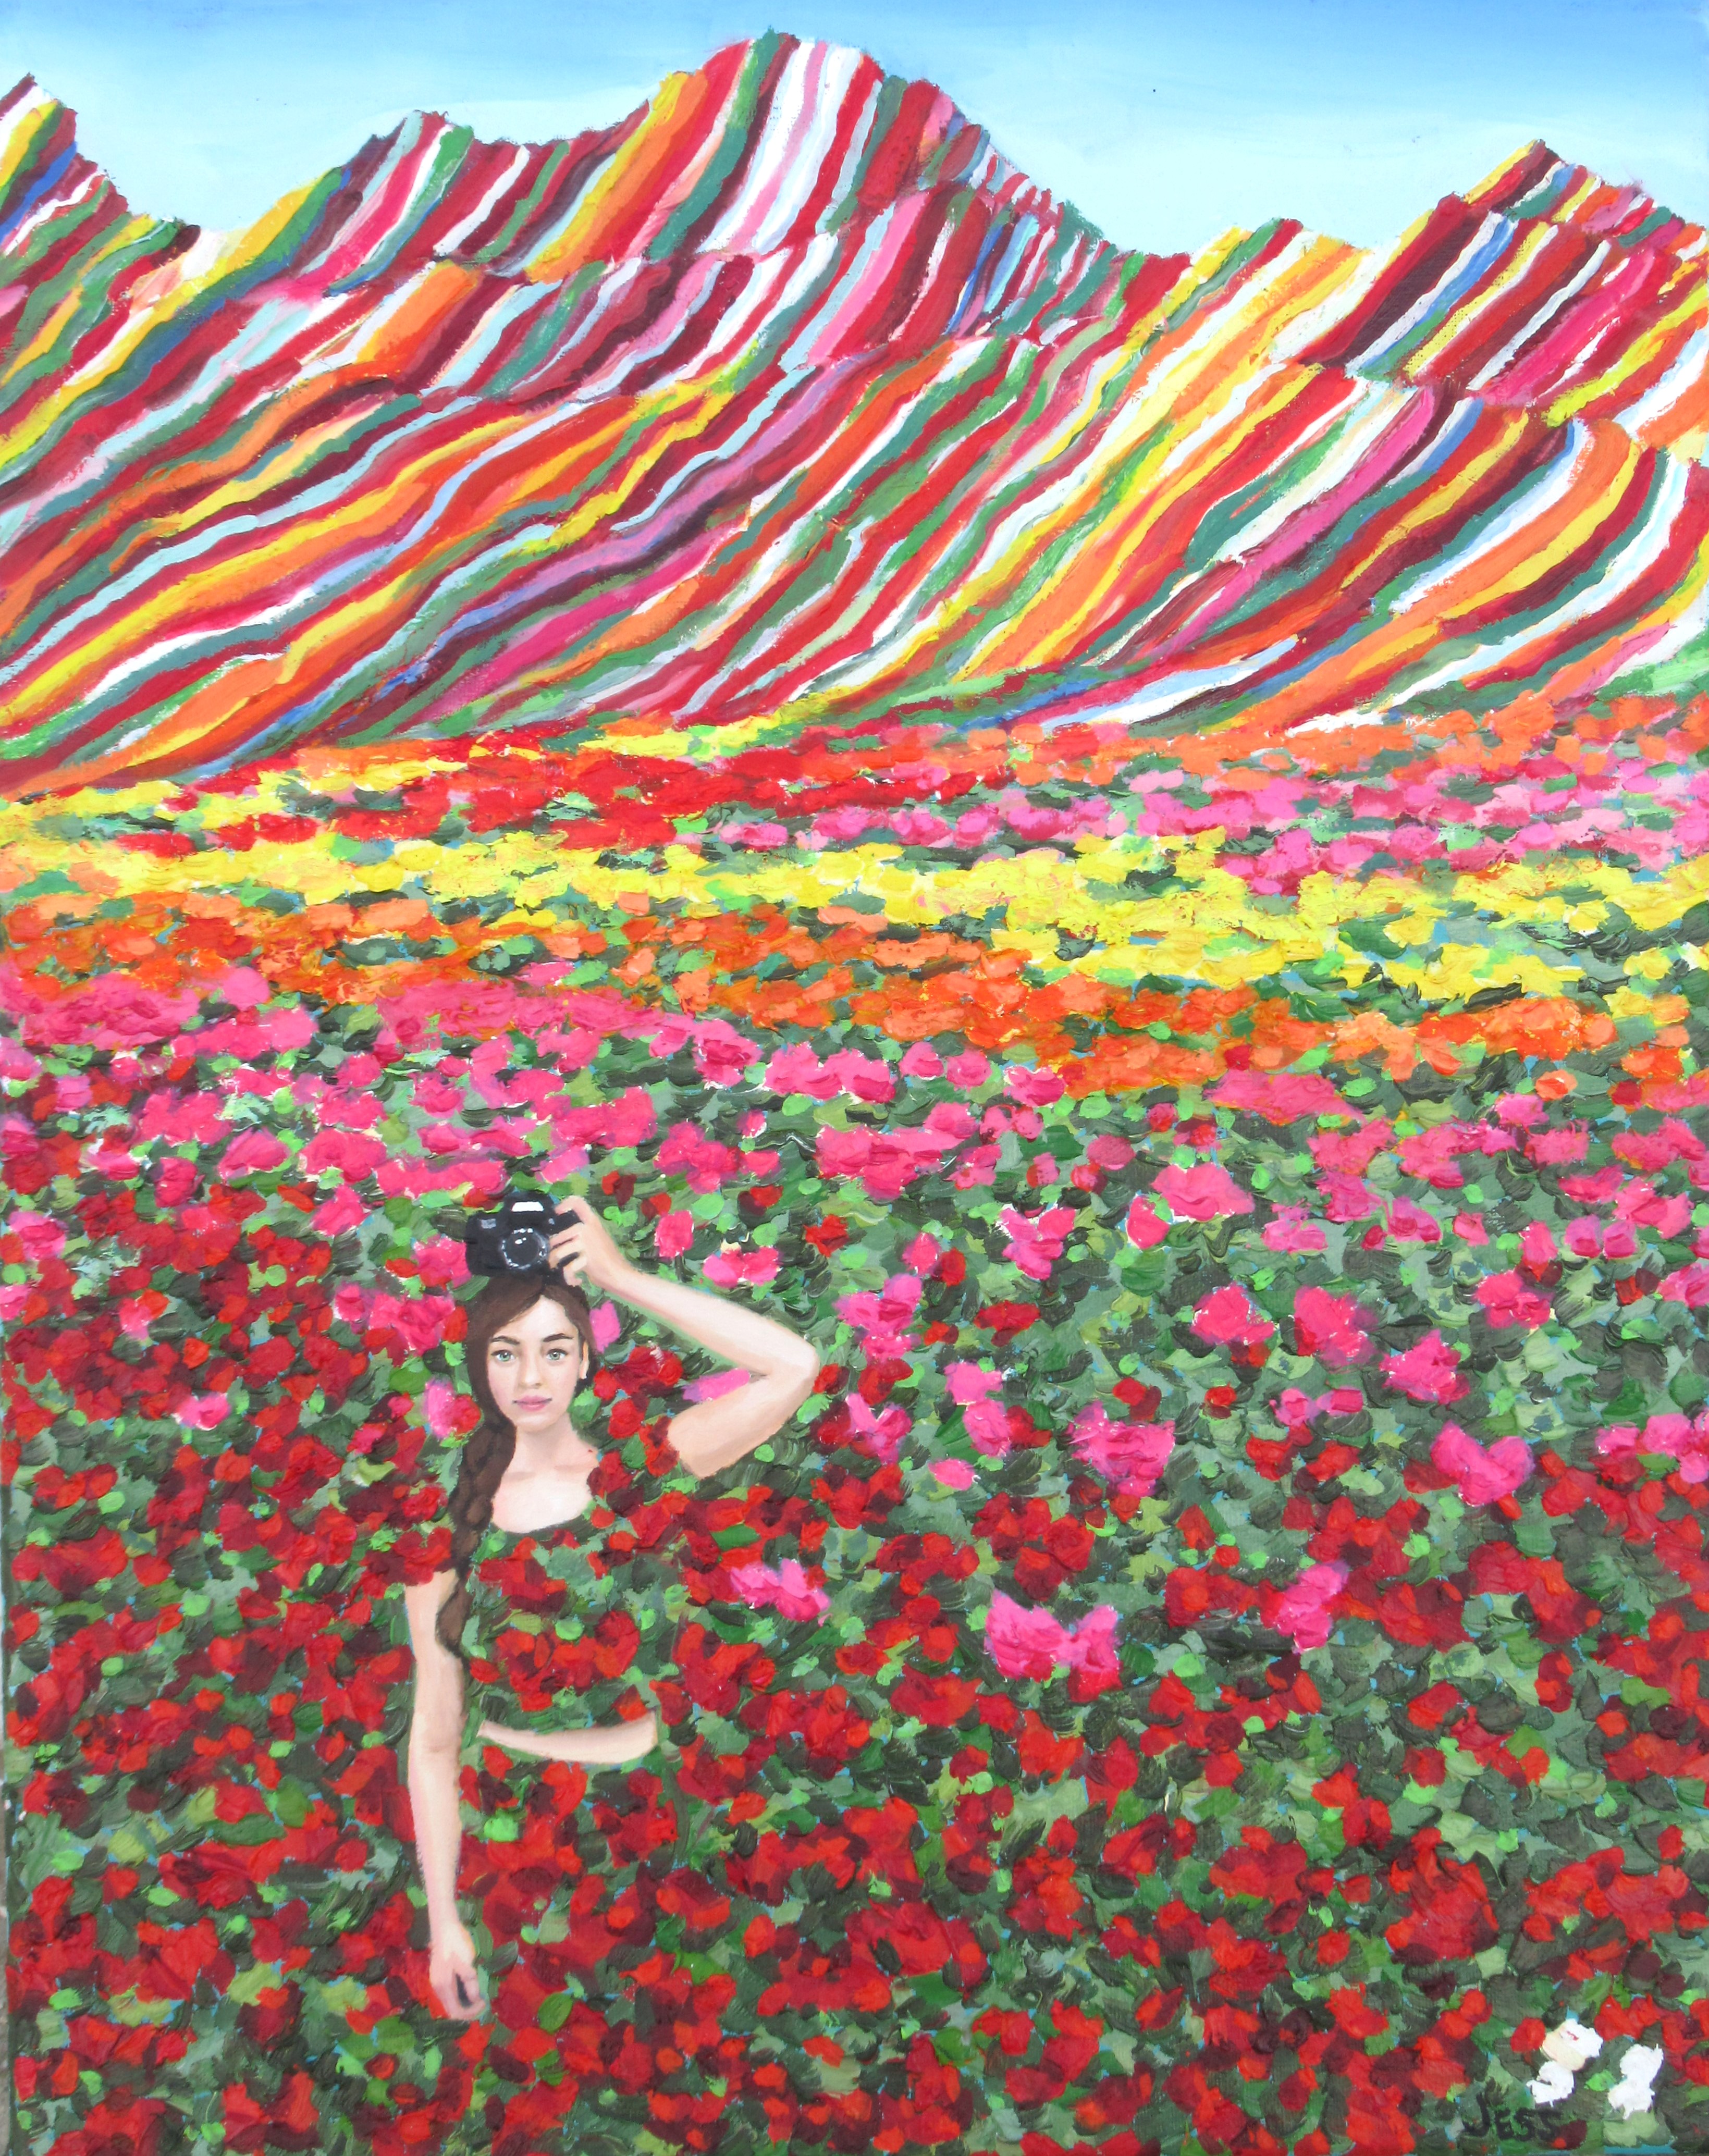 Rainbow Hills, oil on canvas, 16x24 in, Jessica Siemens 2022